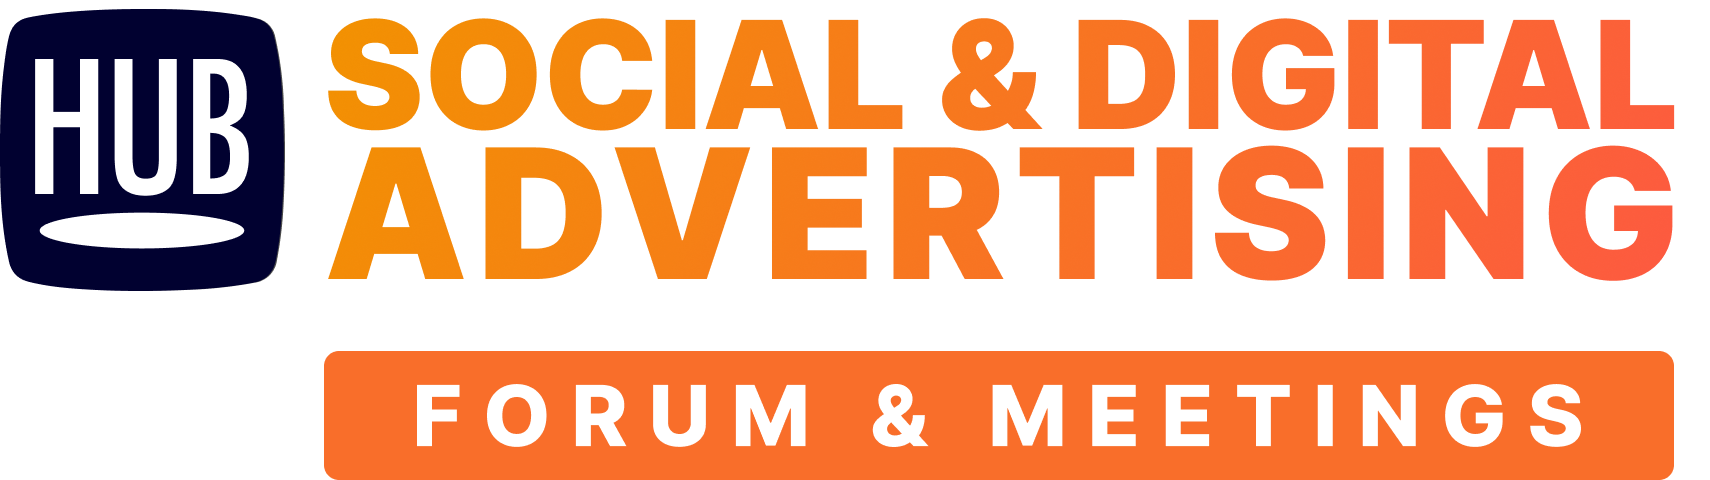 SOCIAL & DIGITAL ADVERTISING Forum & Meetings